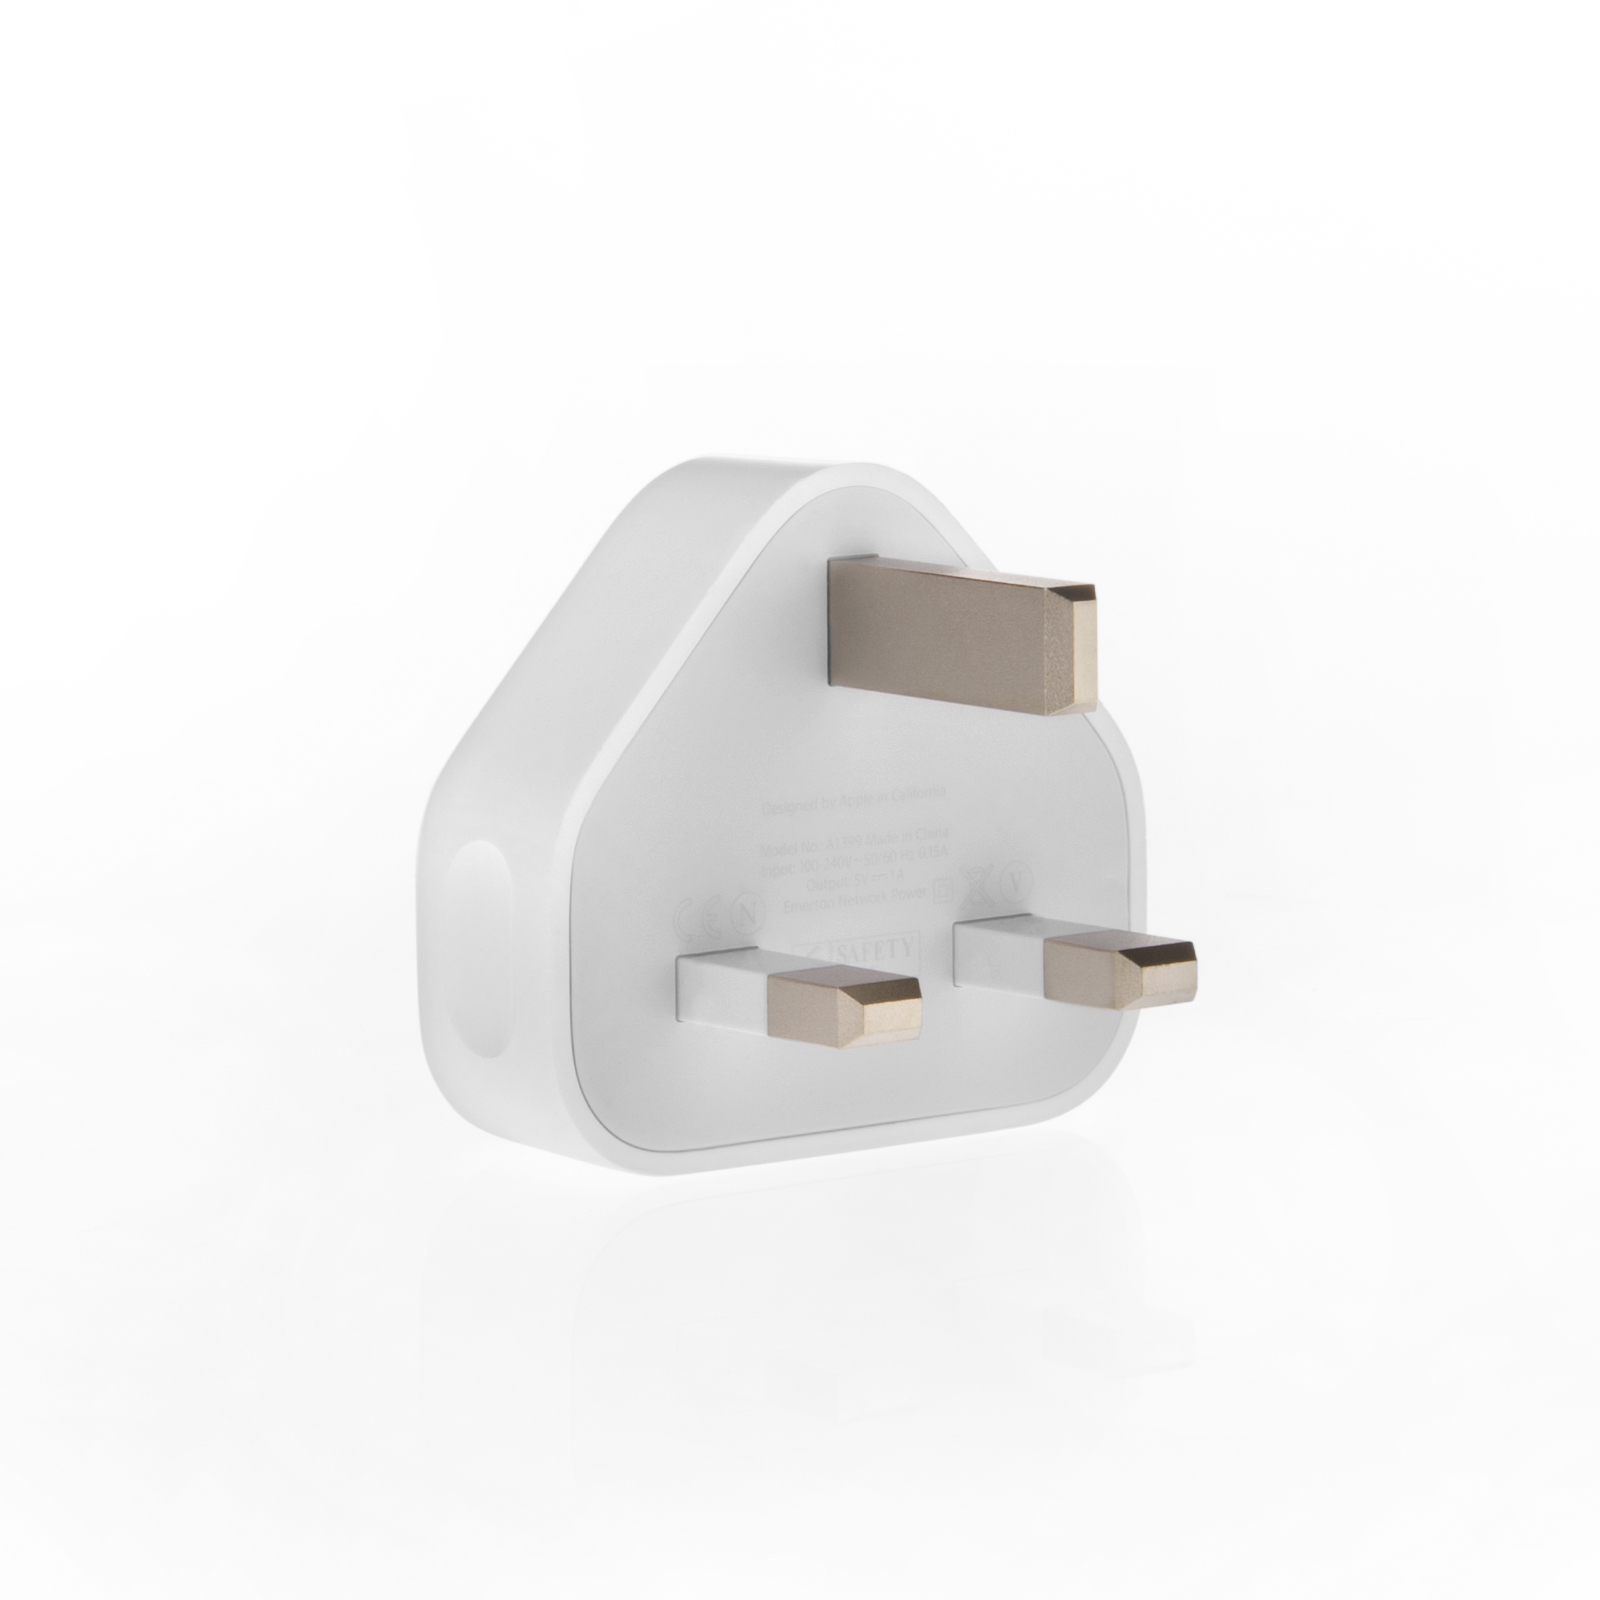 Official Apple UK USB Power Adapter A1399